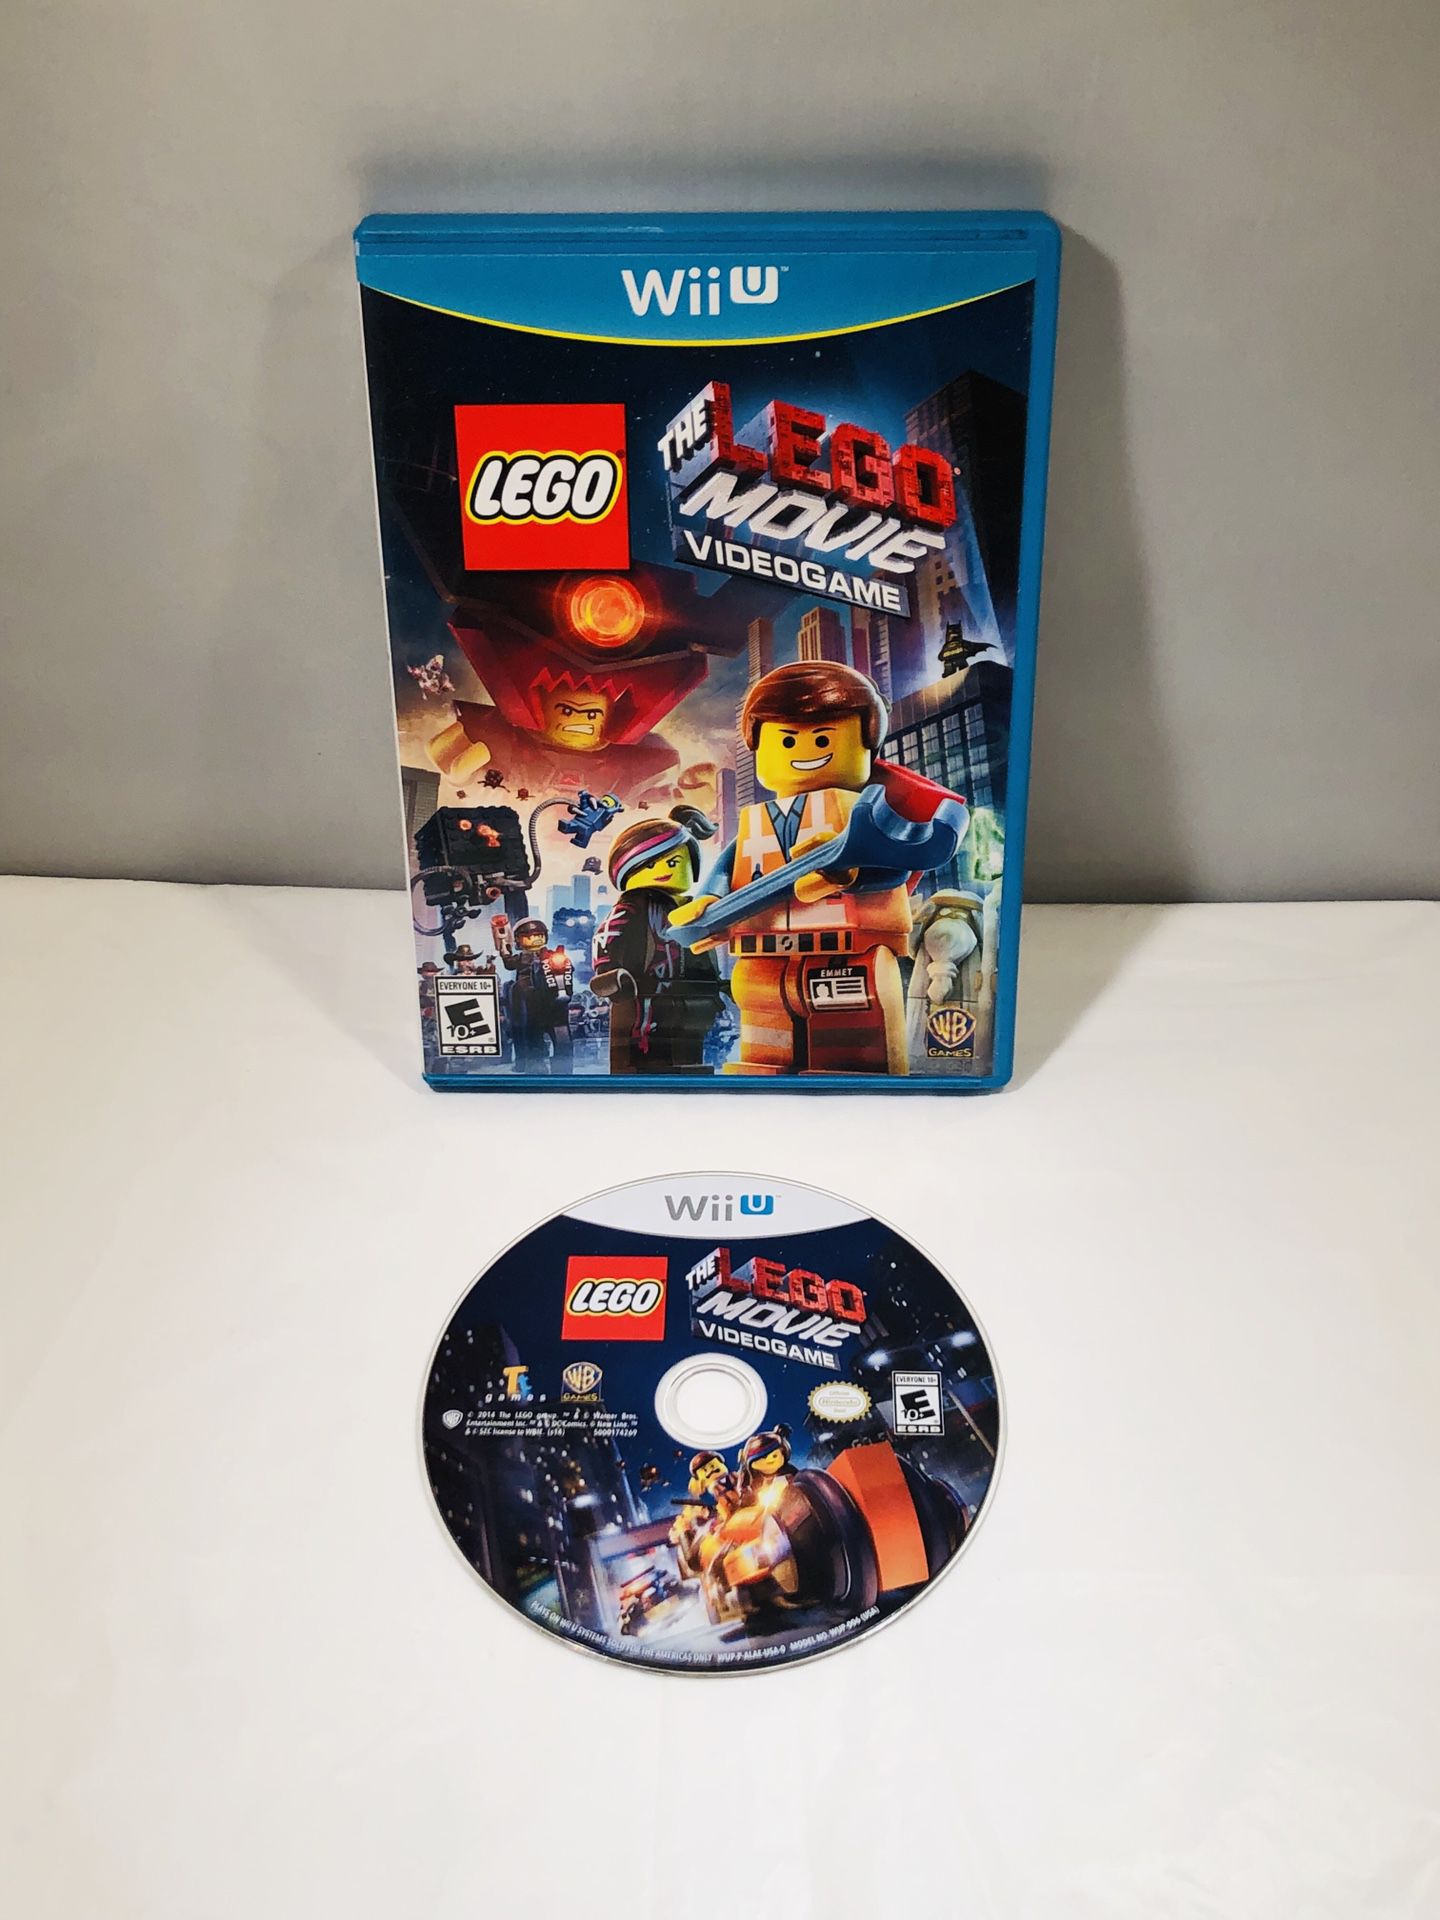 LEGO movie video game Nintendo Wii U no manual